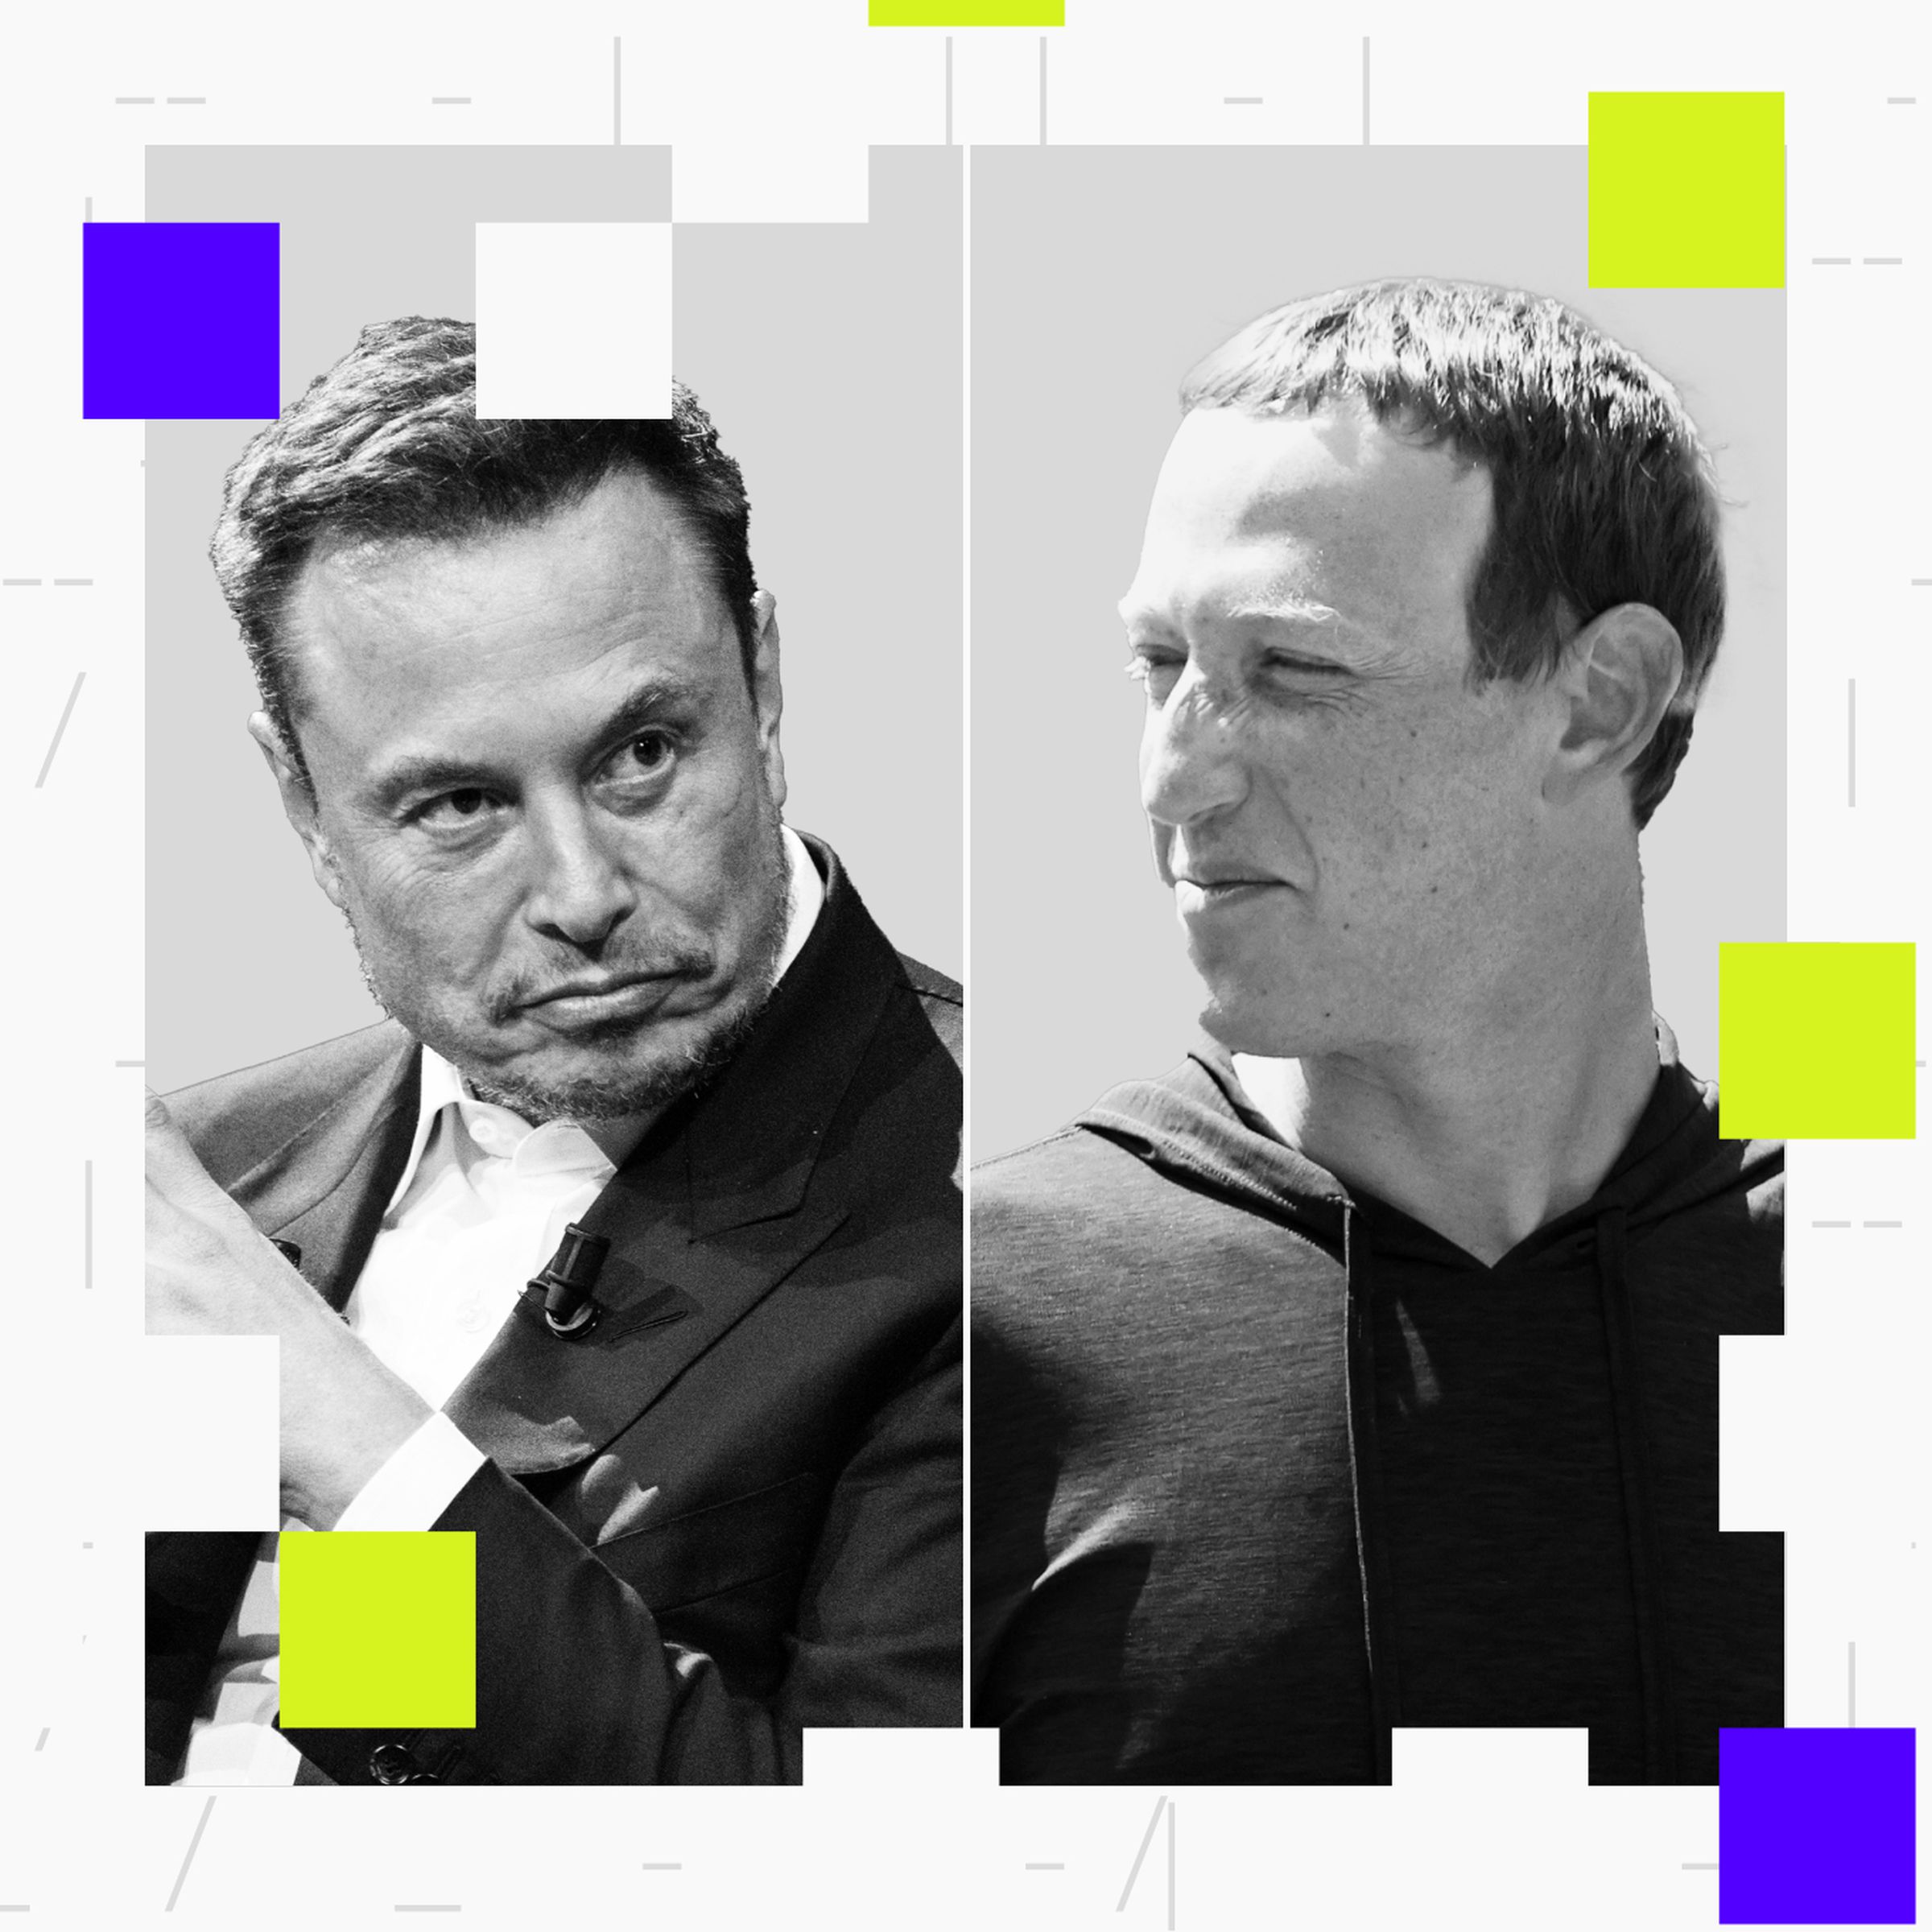 Photos of Elon Musk and Mark Zuckerberg.